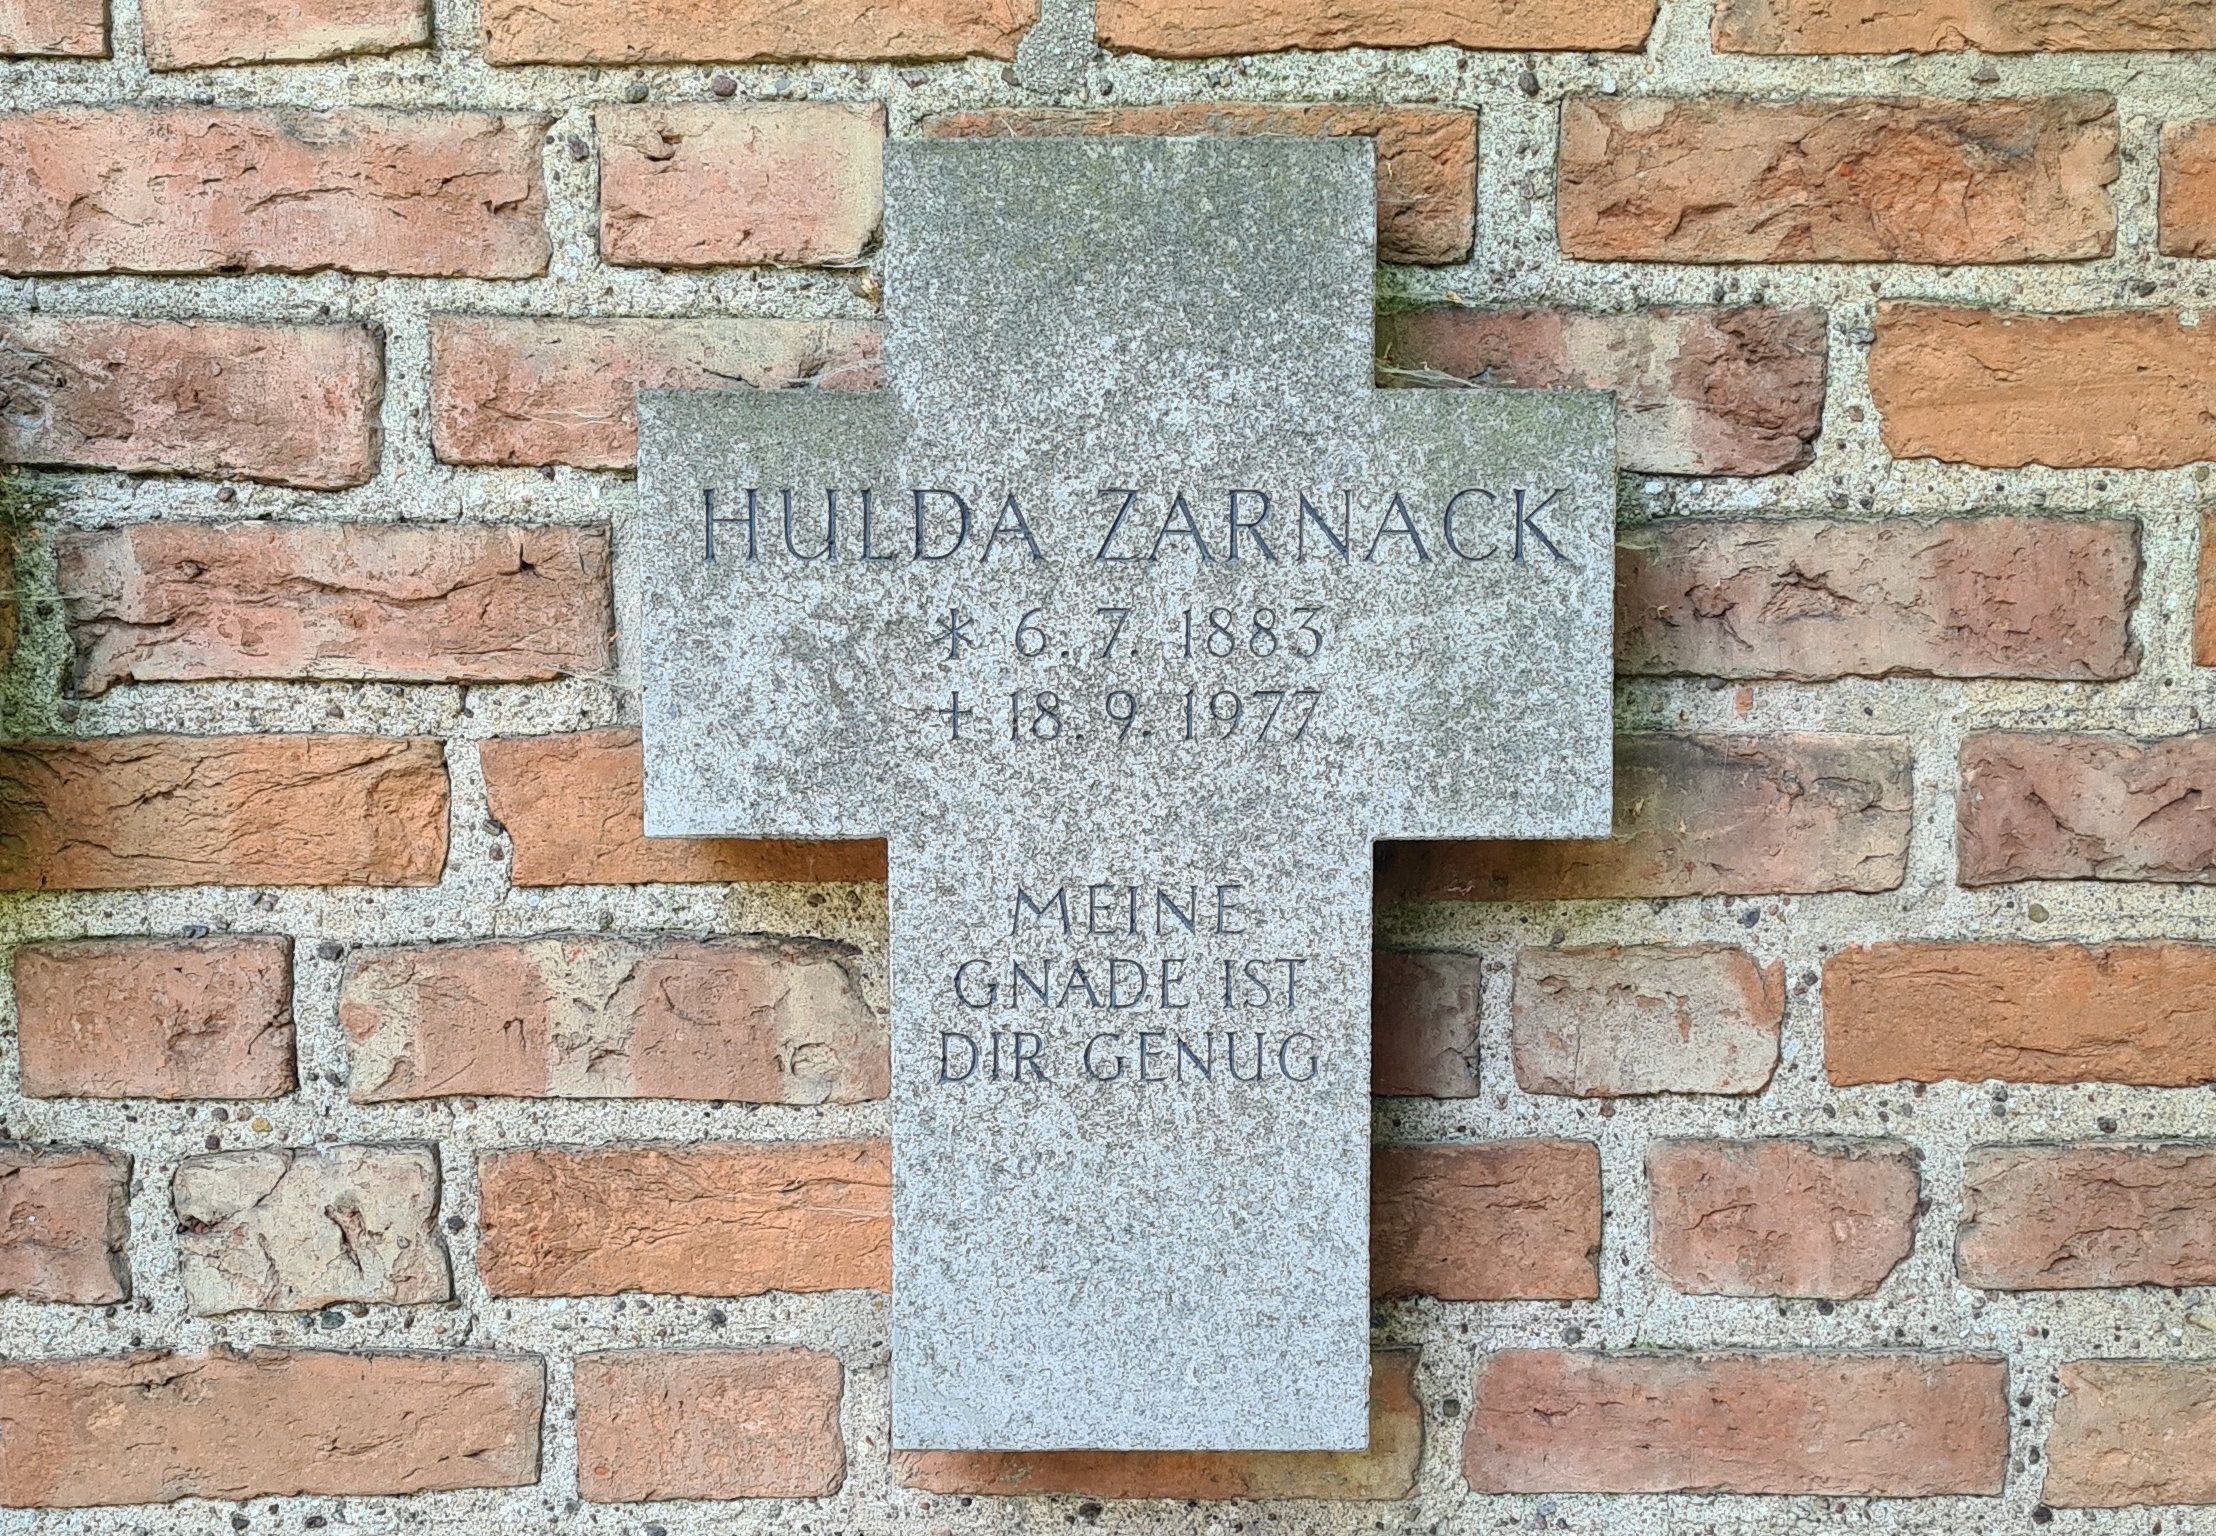 Hulda Zarnack: Oberin des Burckhardthauses